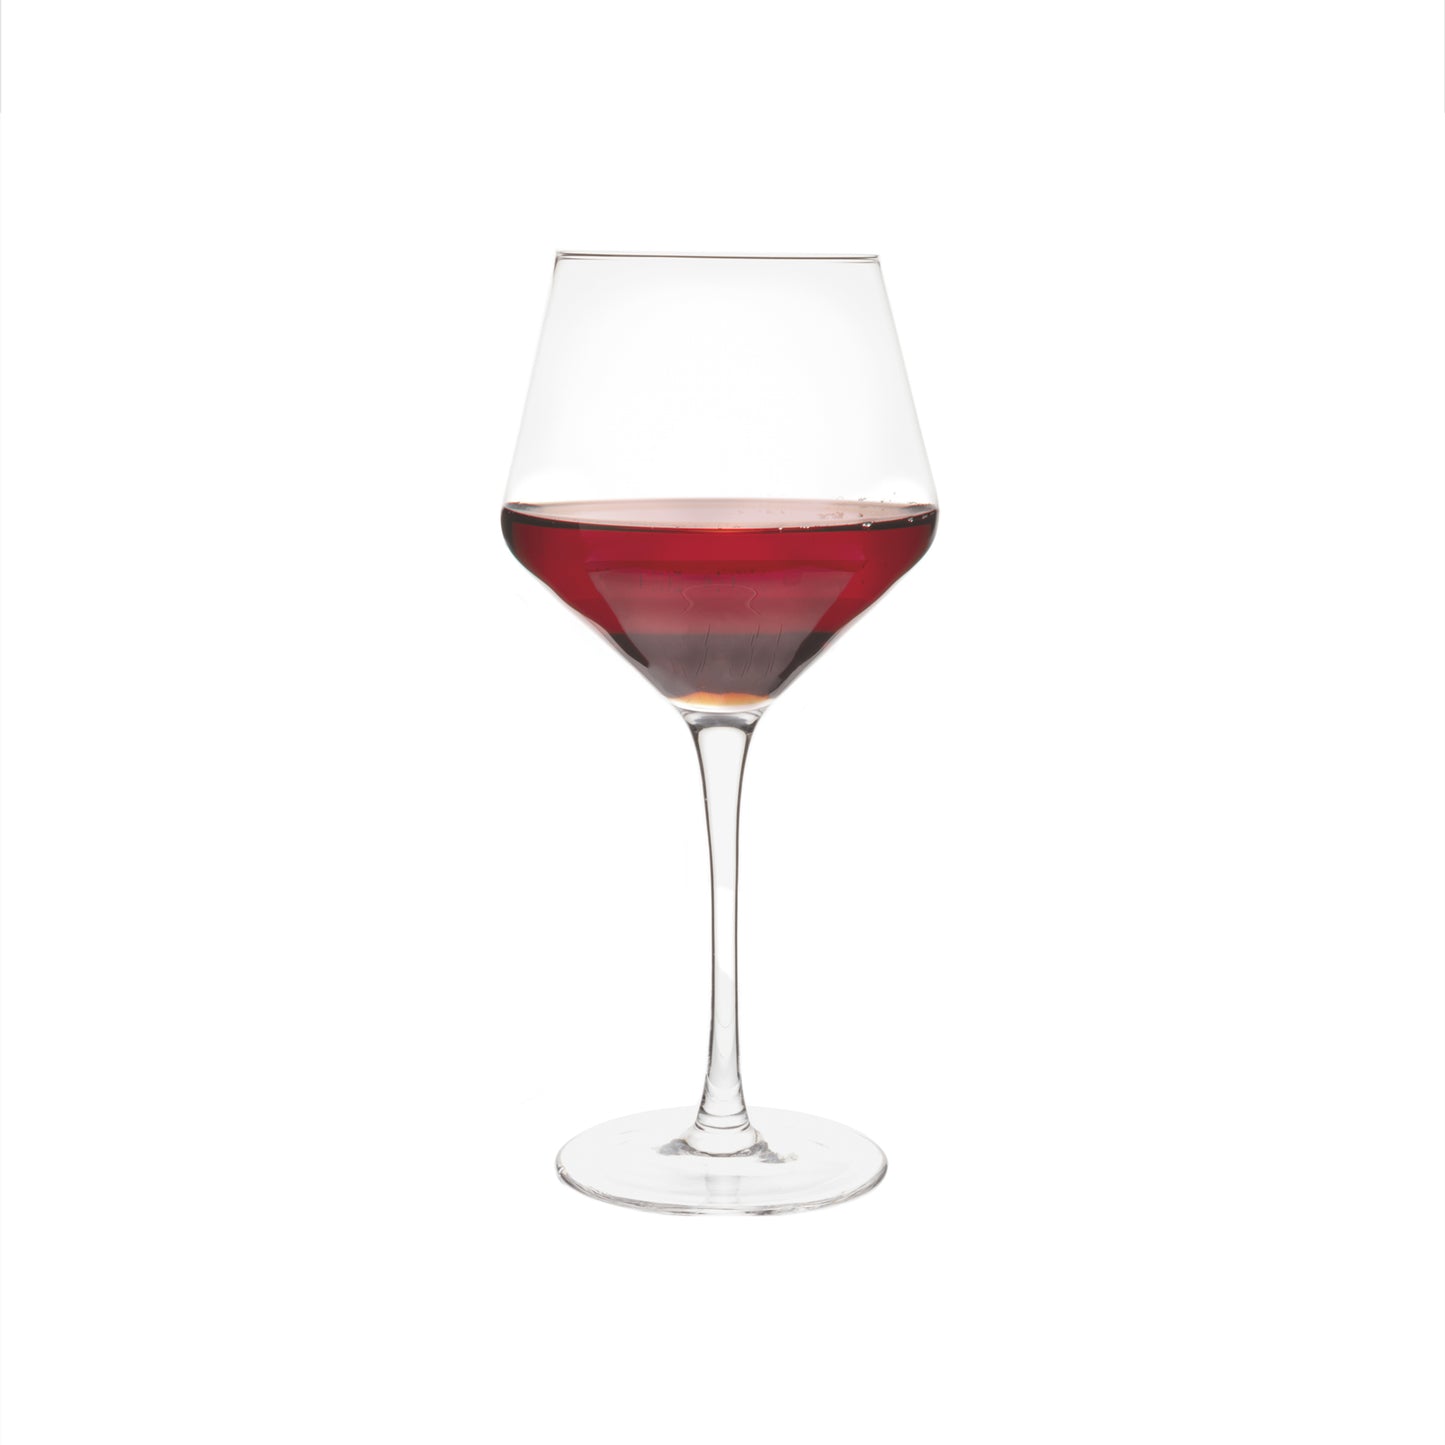 Set of 4 Red Wine Glasses - 23 Oz